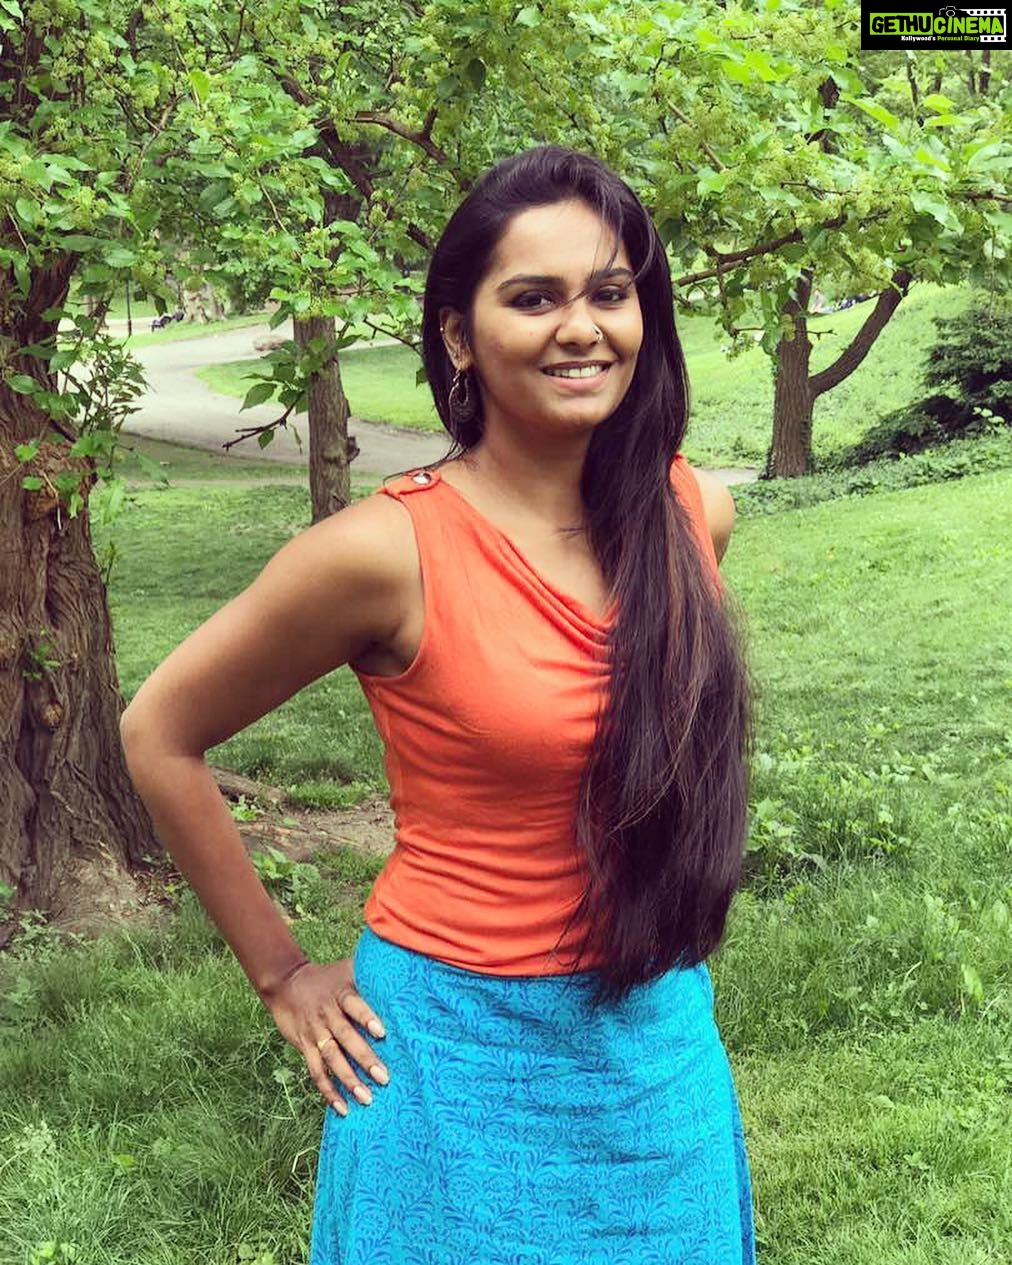 Lakshmi Priyaa Chandramouli Instagram - Throwback to one of those glorious spring days spent in Central Park! #imissnyc #throwbackthursday #centralparklove #cantwaittogoagain #i❤️ny #springtimeatnyc